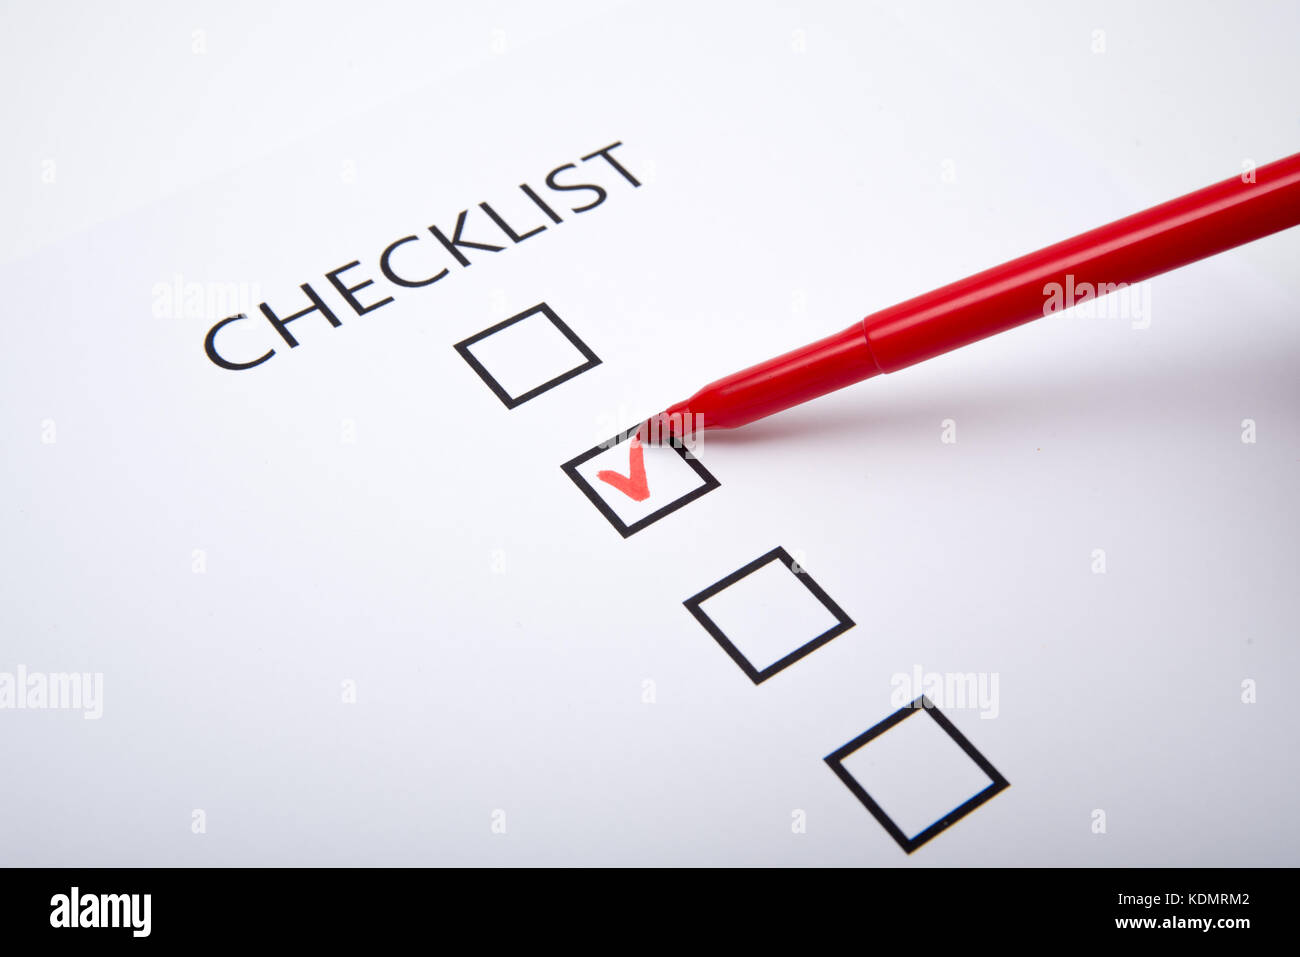 Checklist on white paper Stock Photo